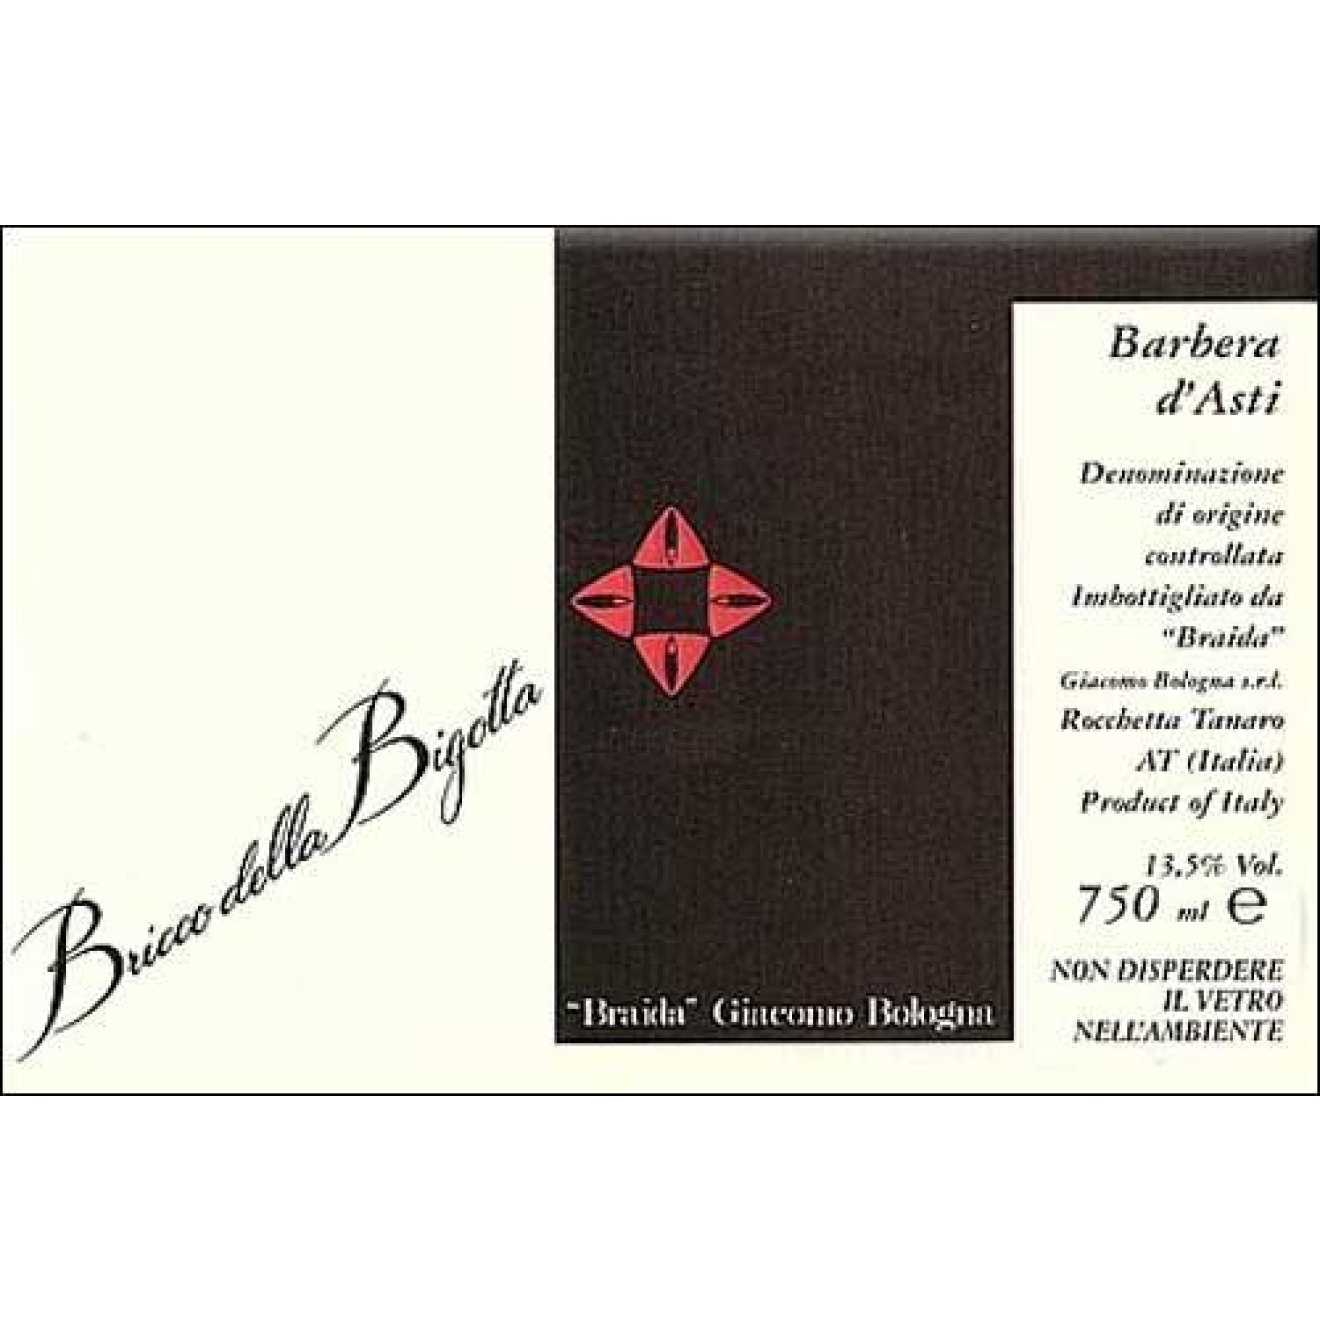 1996 Barbera d'Asti Bricco della Bigotta (1,5lt.) - Braida